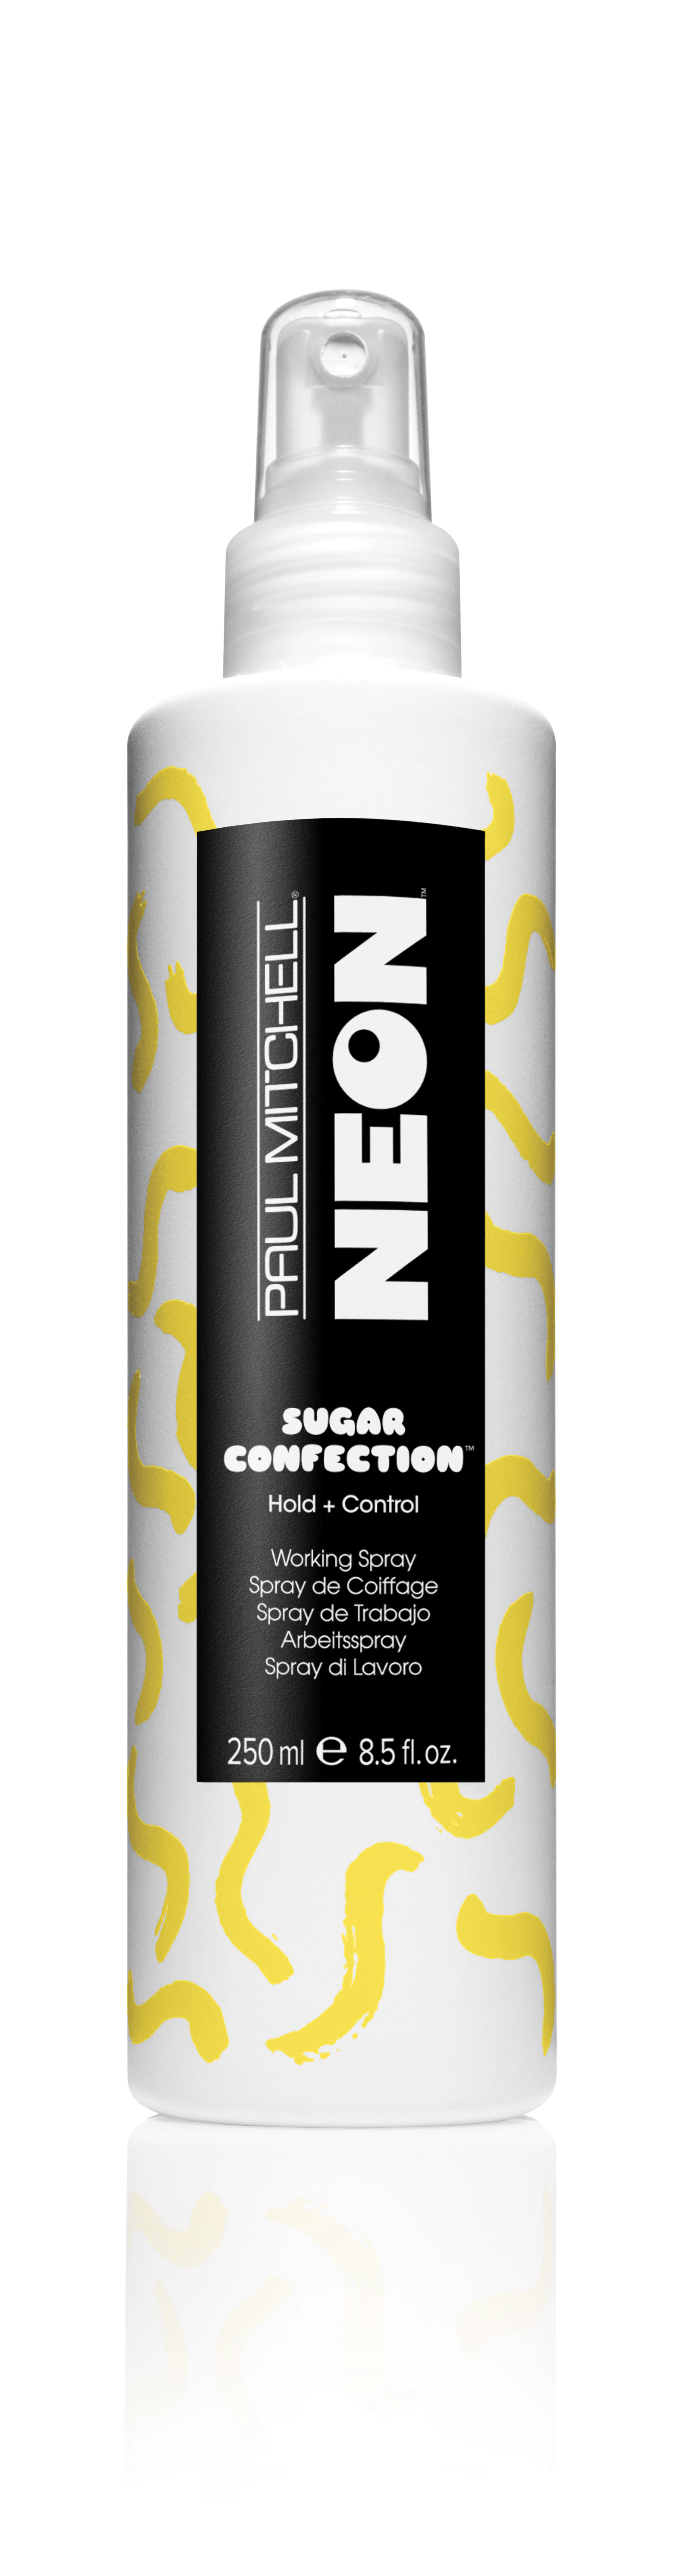 Paul Mitchell Neon Sugar Confection